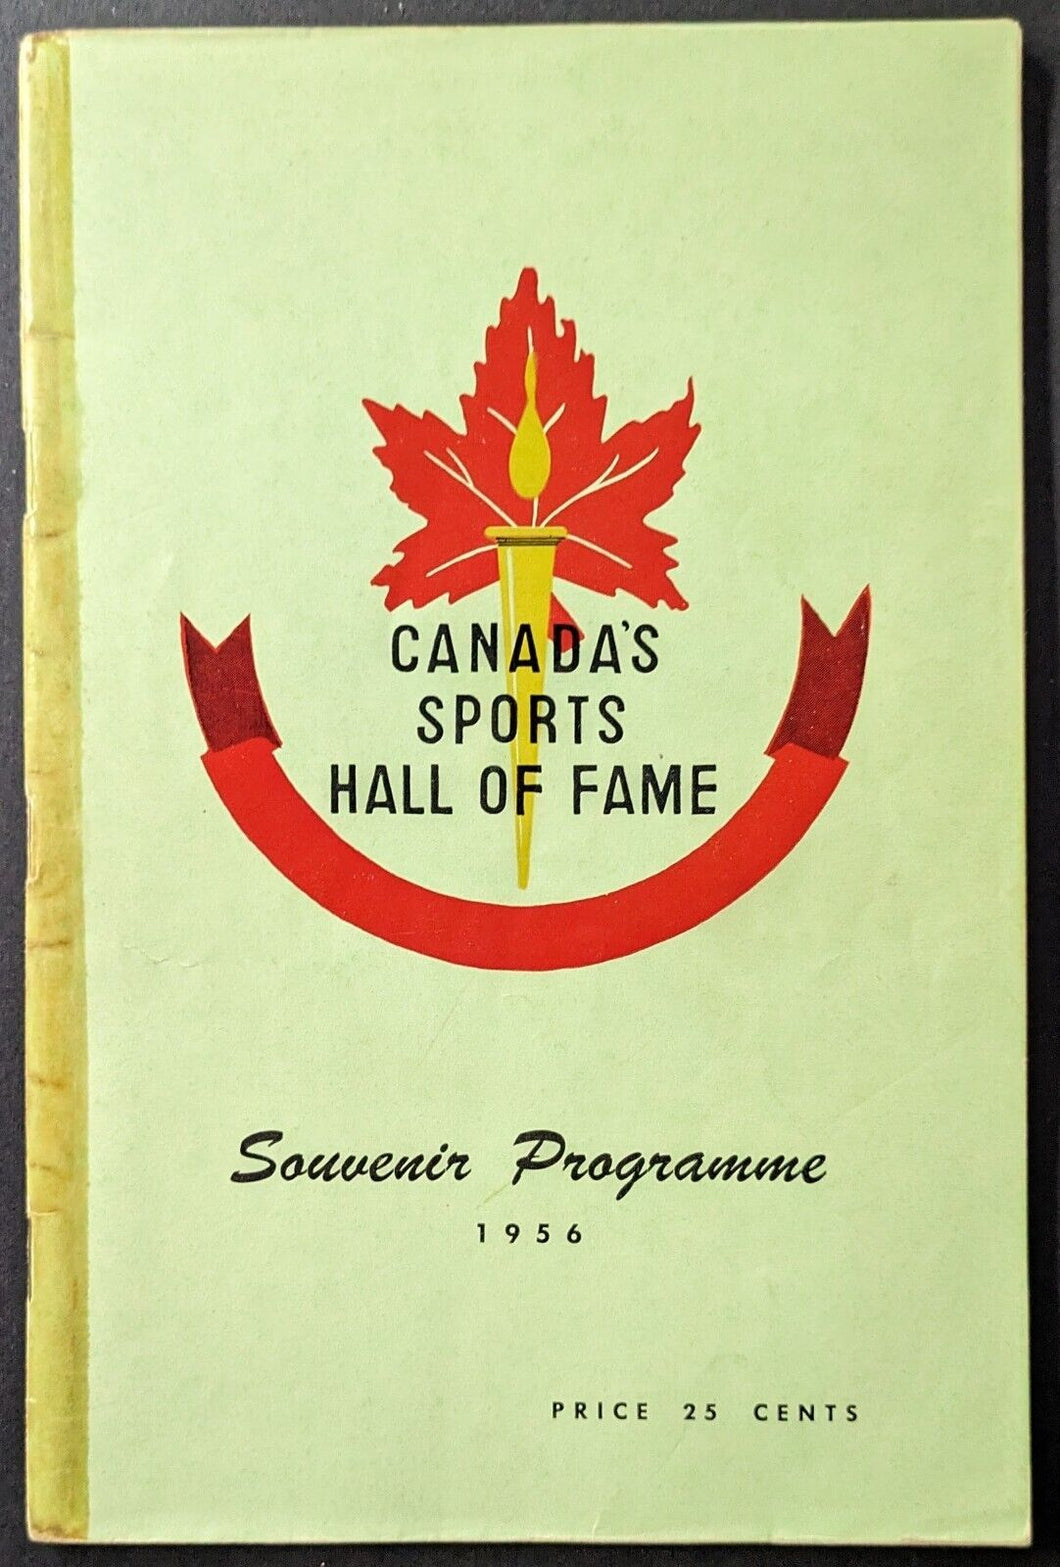 1956 Canada Sports Hall Of Fame Souvenir Programme Vintage Canadian Publication